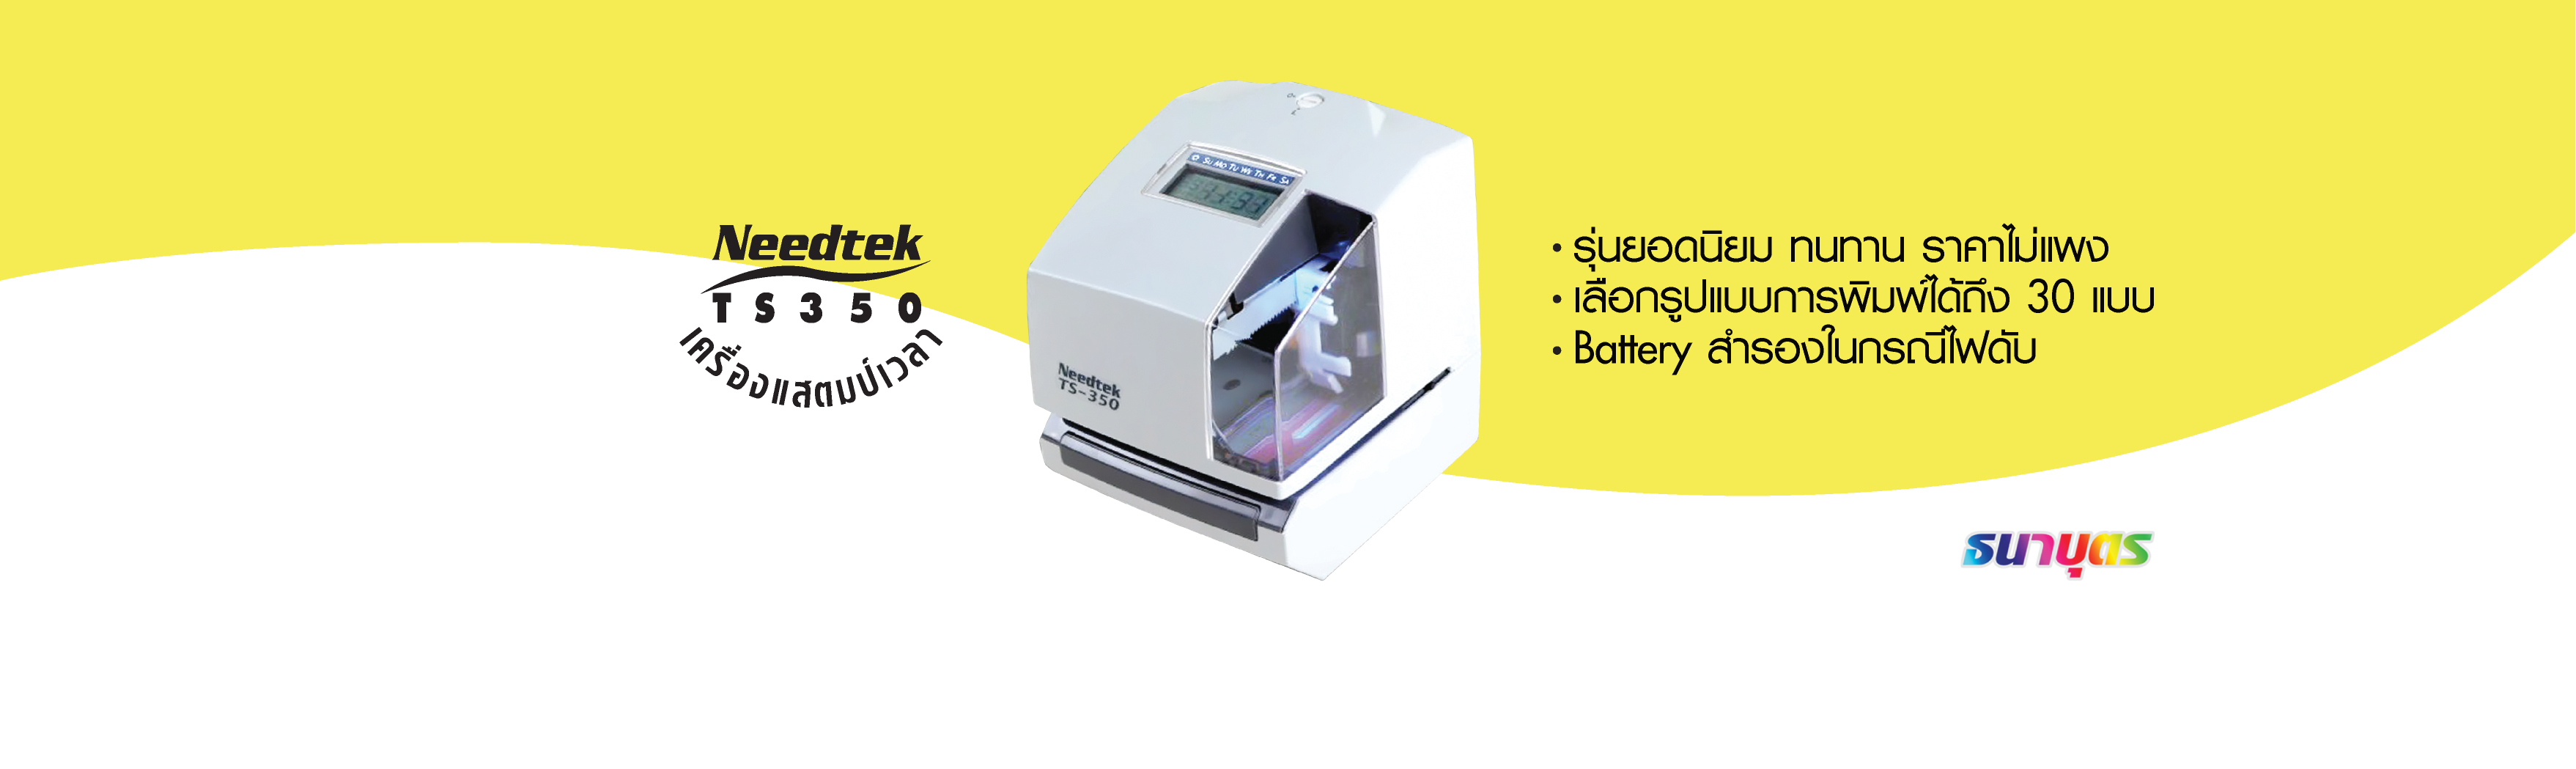 Time Stamp Tanabutr from Needtek model TS350